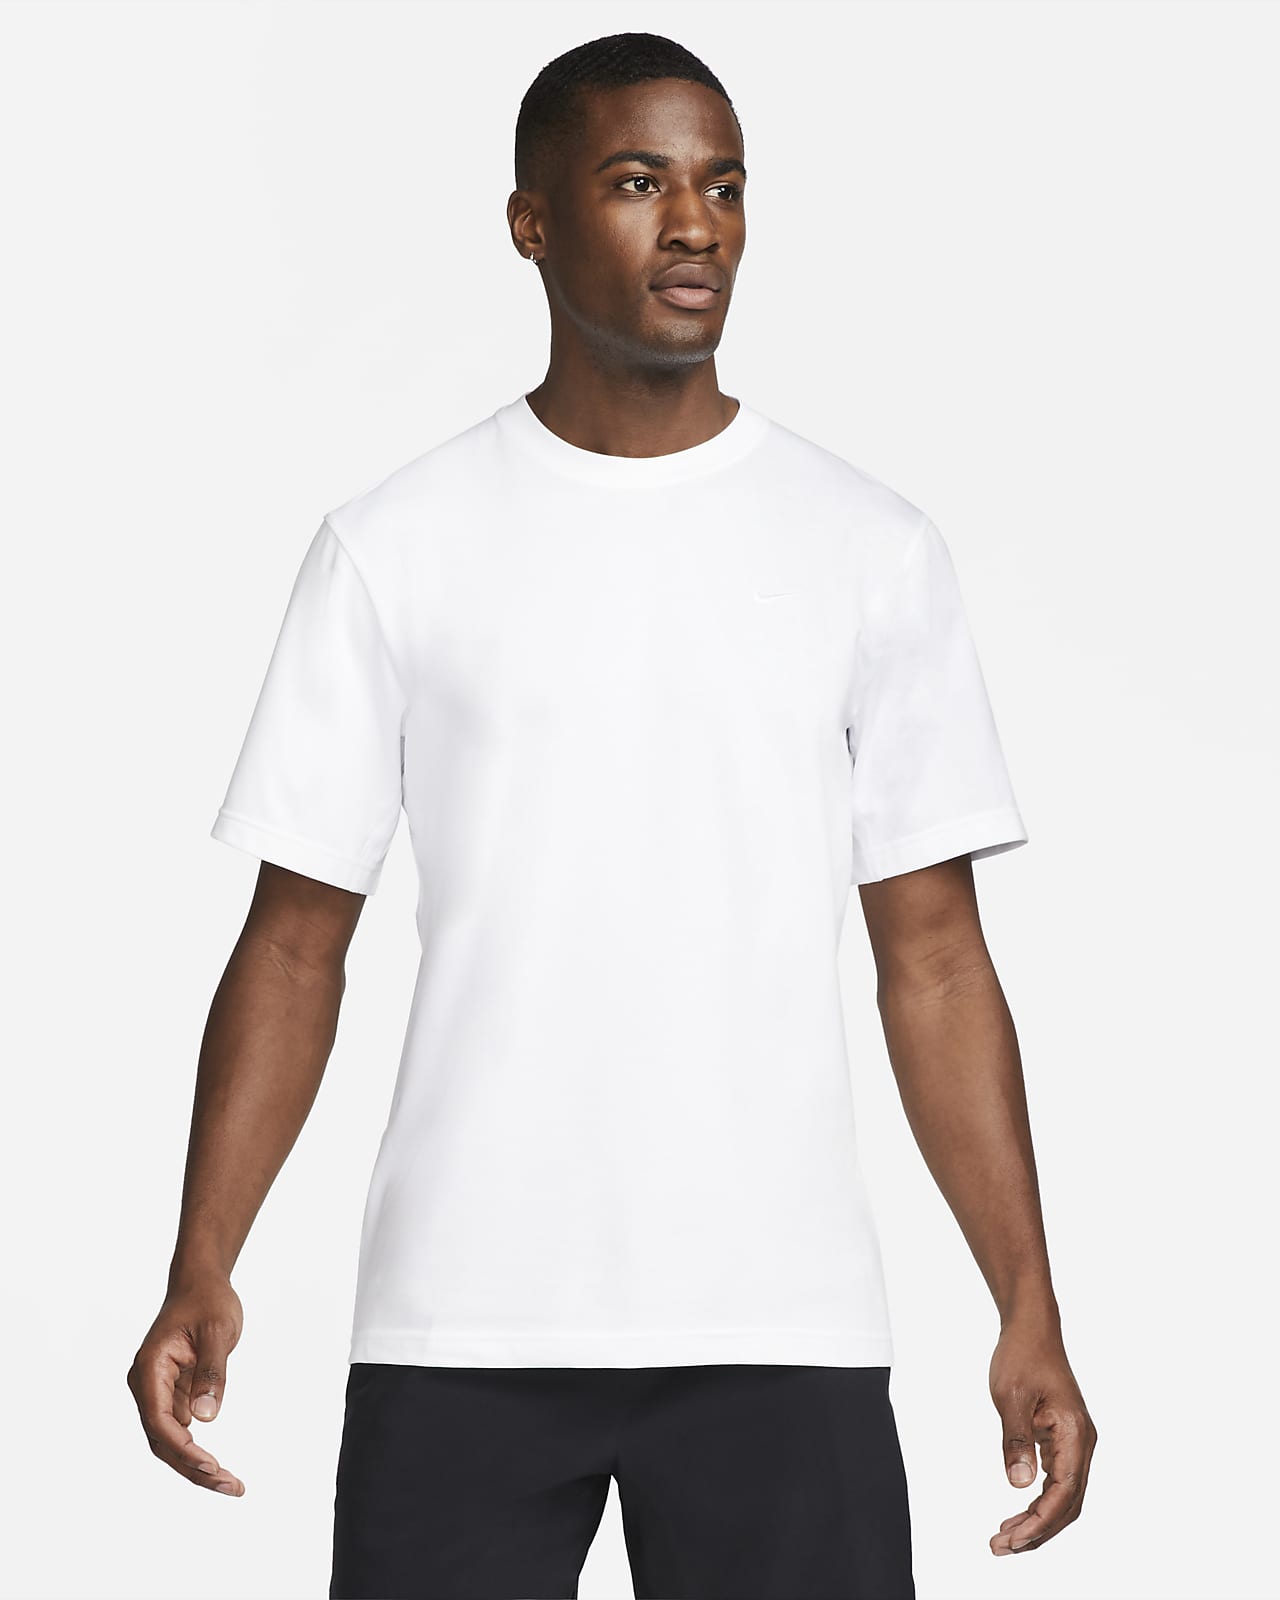 Nike Primary Camiseta Dri-FIT versátil de manga corta - Hombre